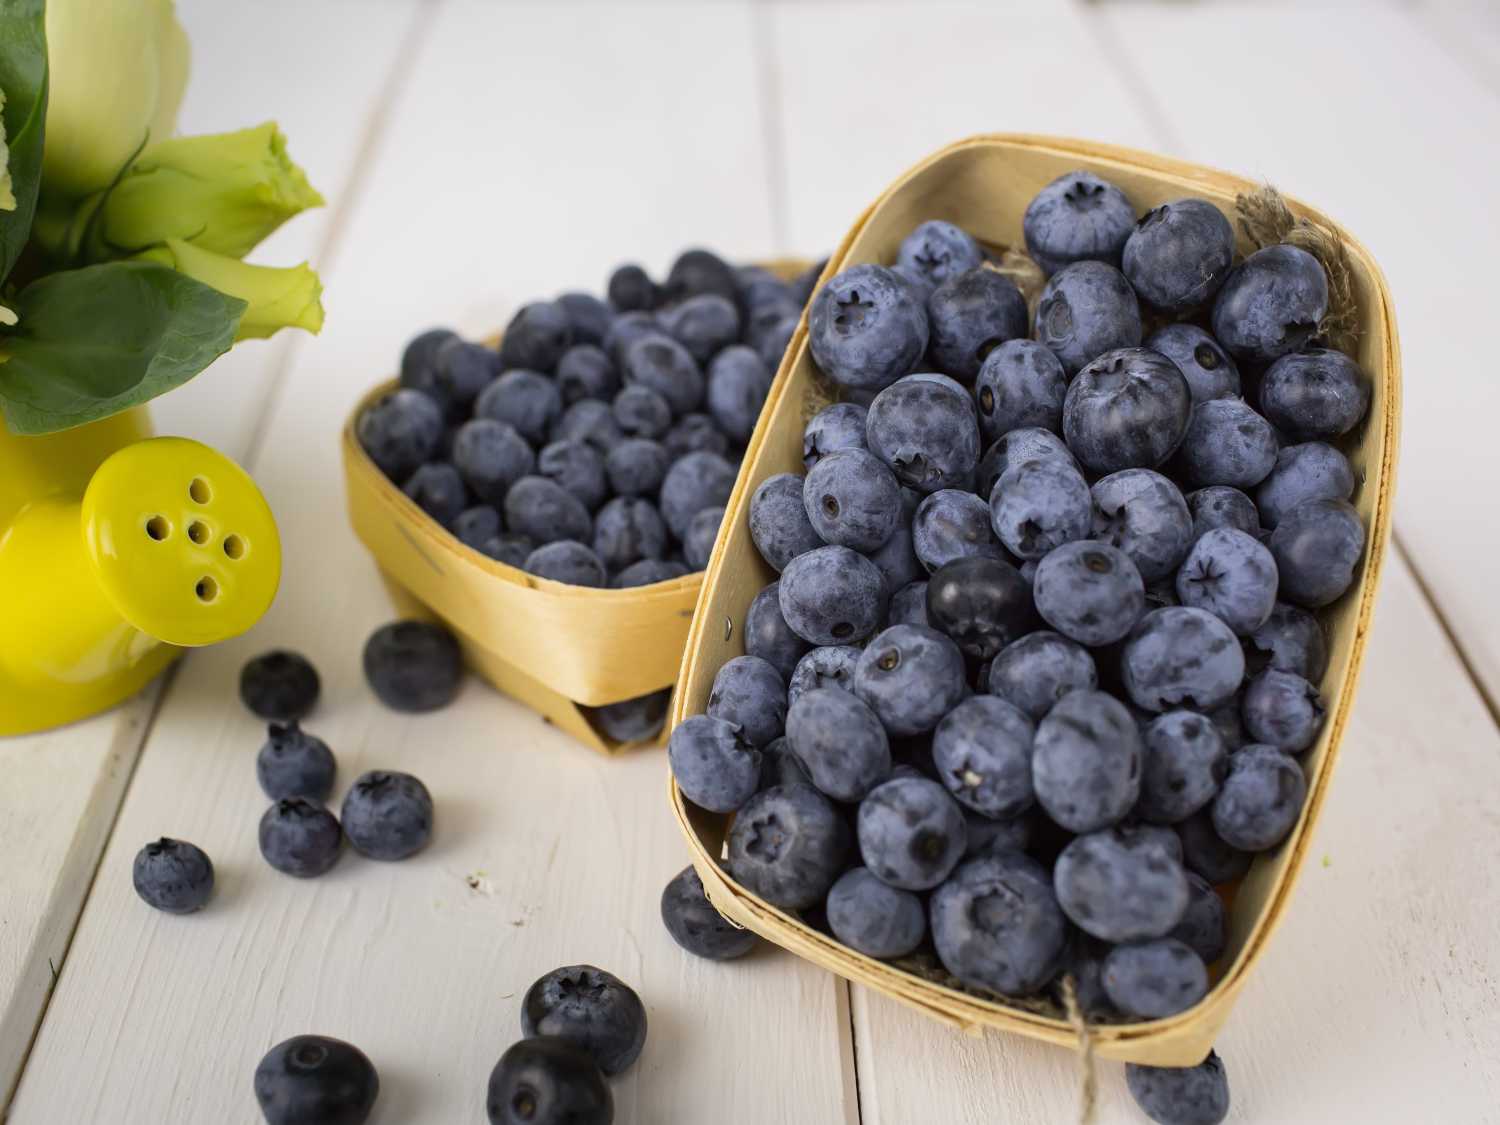 Health benefits of bilberry